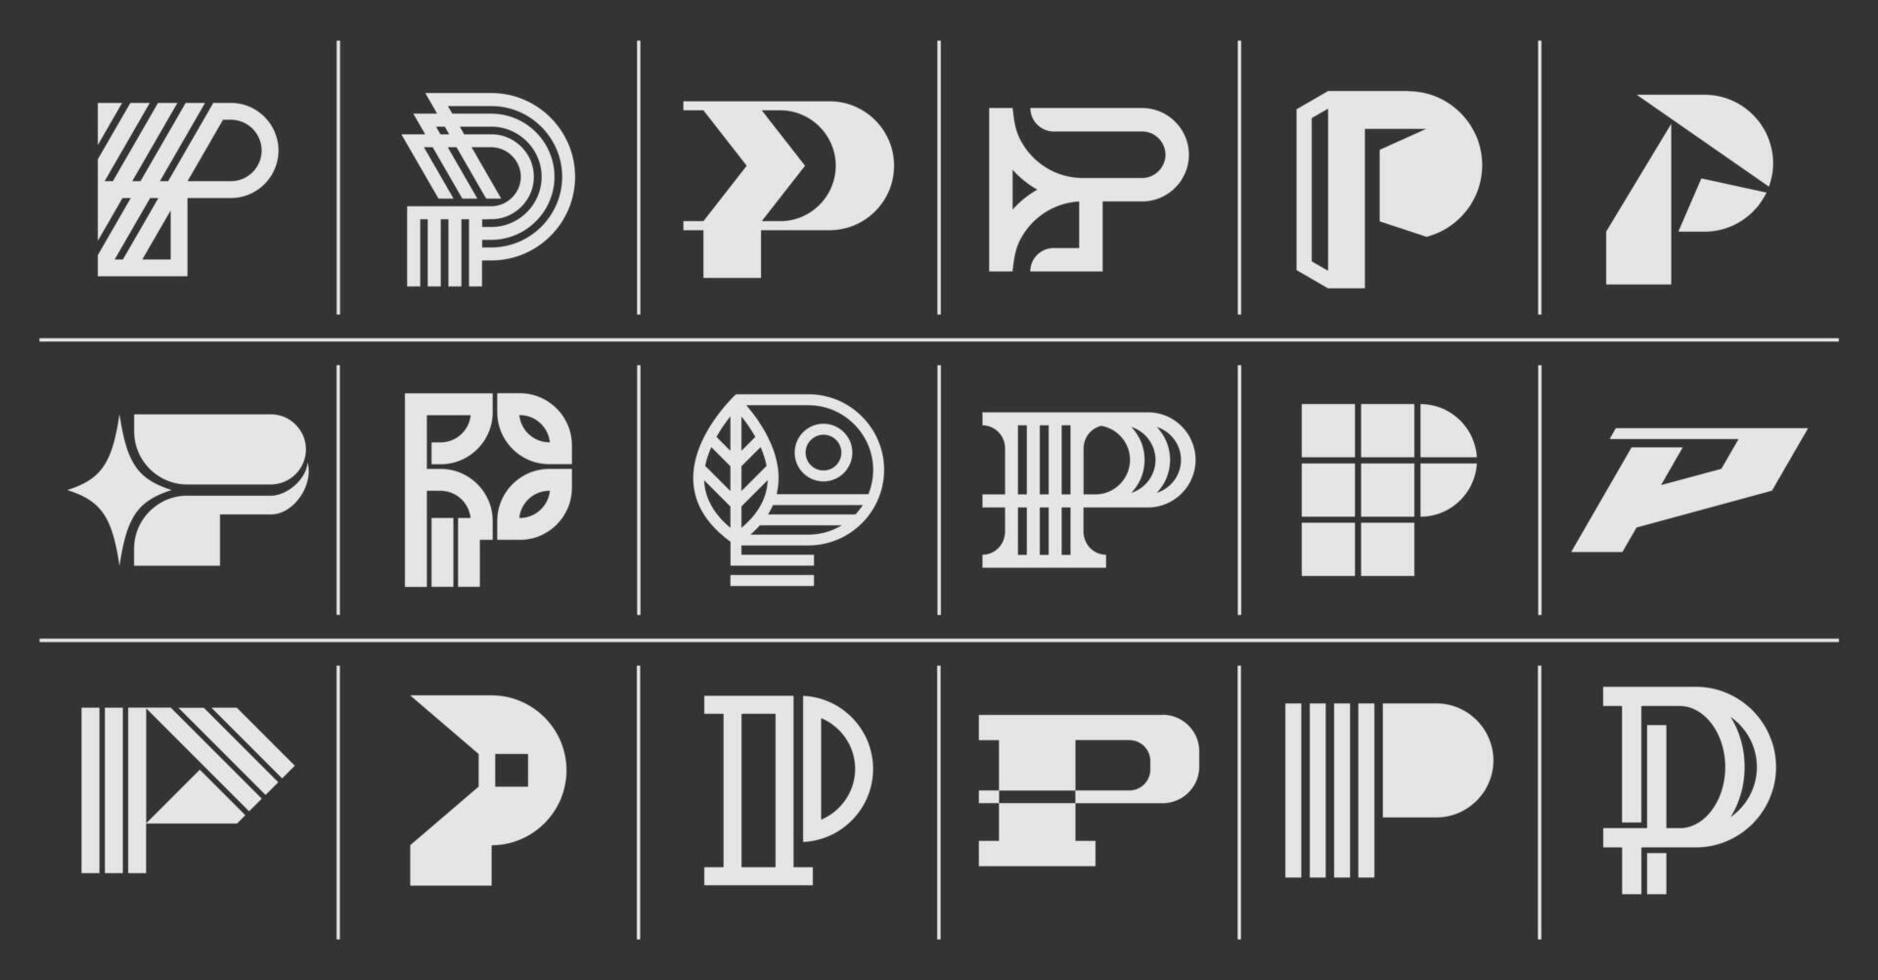 bunt av linje abstrakt brev p logotyp branding vektor